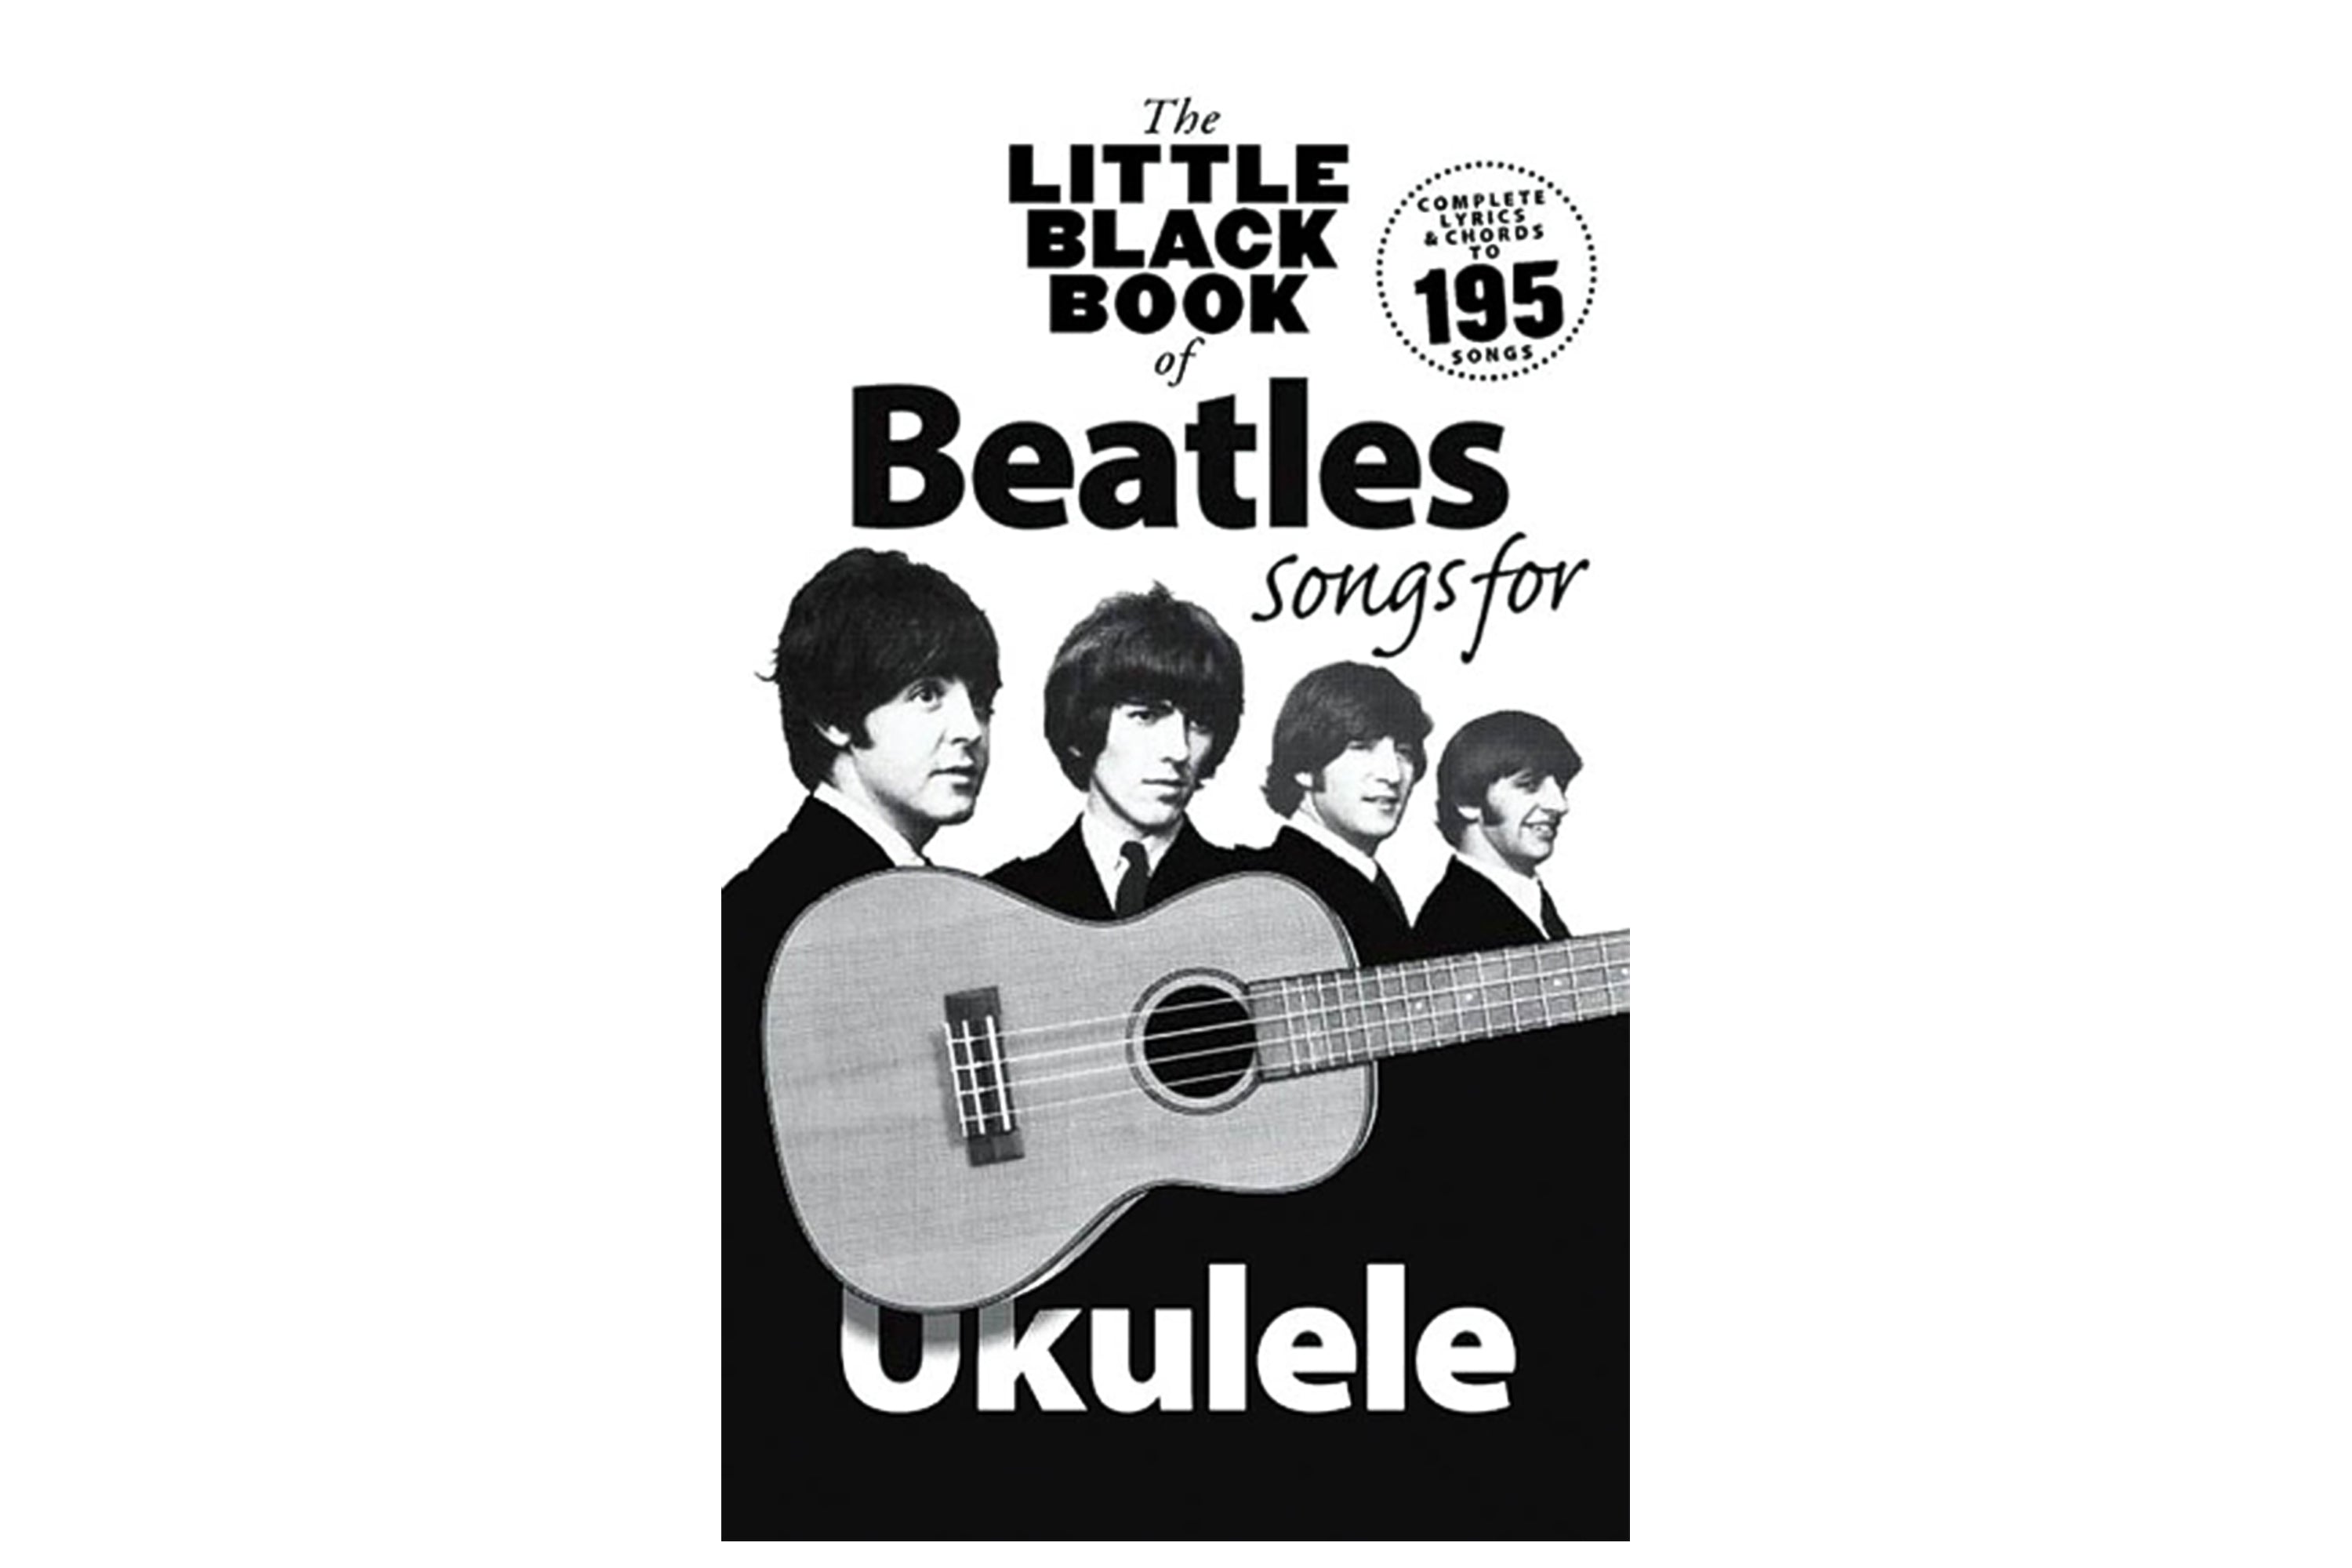 The Little Black Book of Beatles Songs For Ukulele 195 Songs